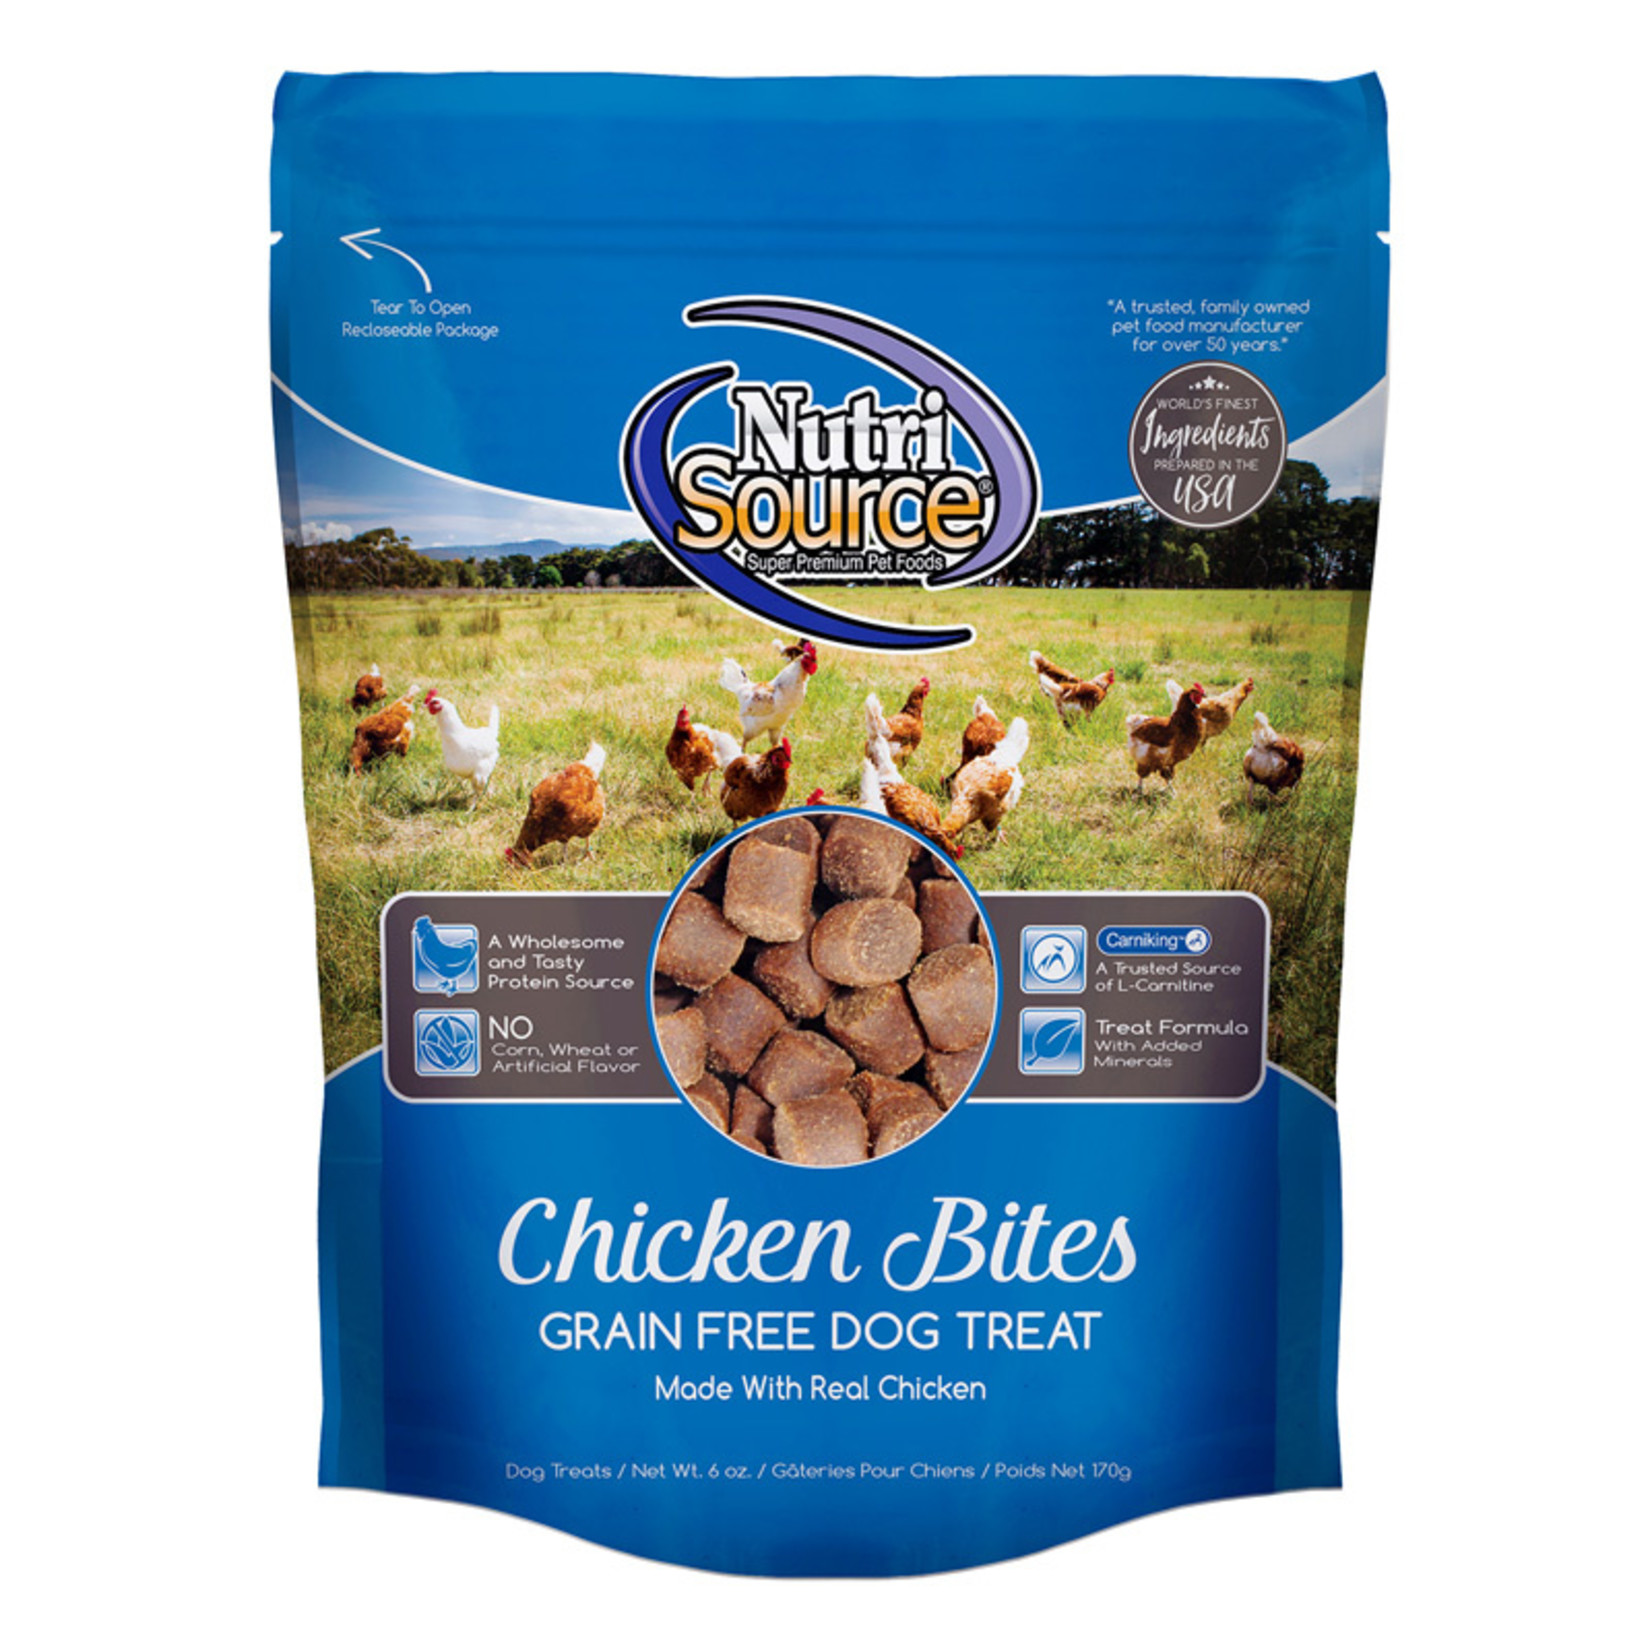 NutriSource NutriSource Dog Treats Chicken Bites 6oz Grain Free